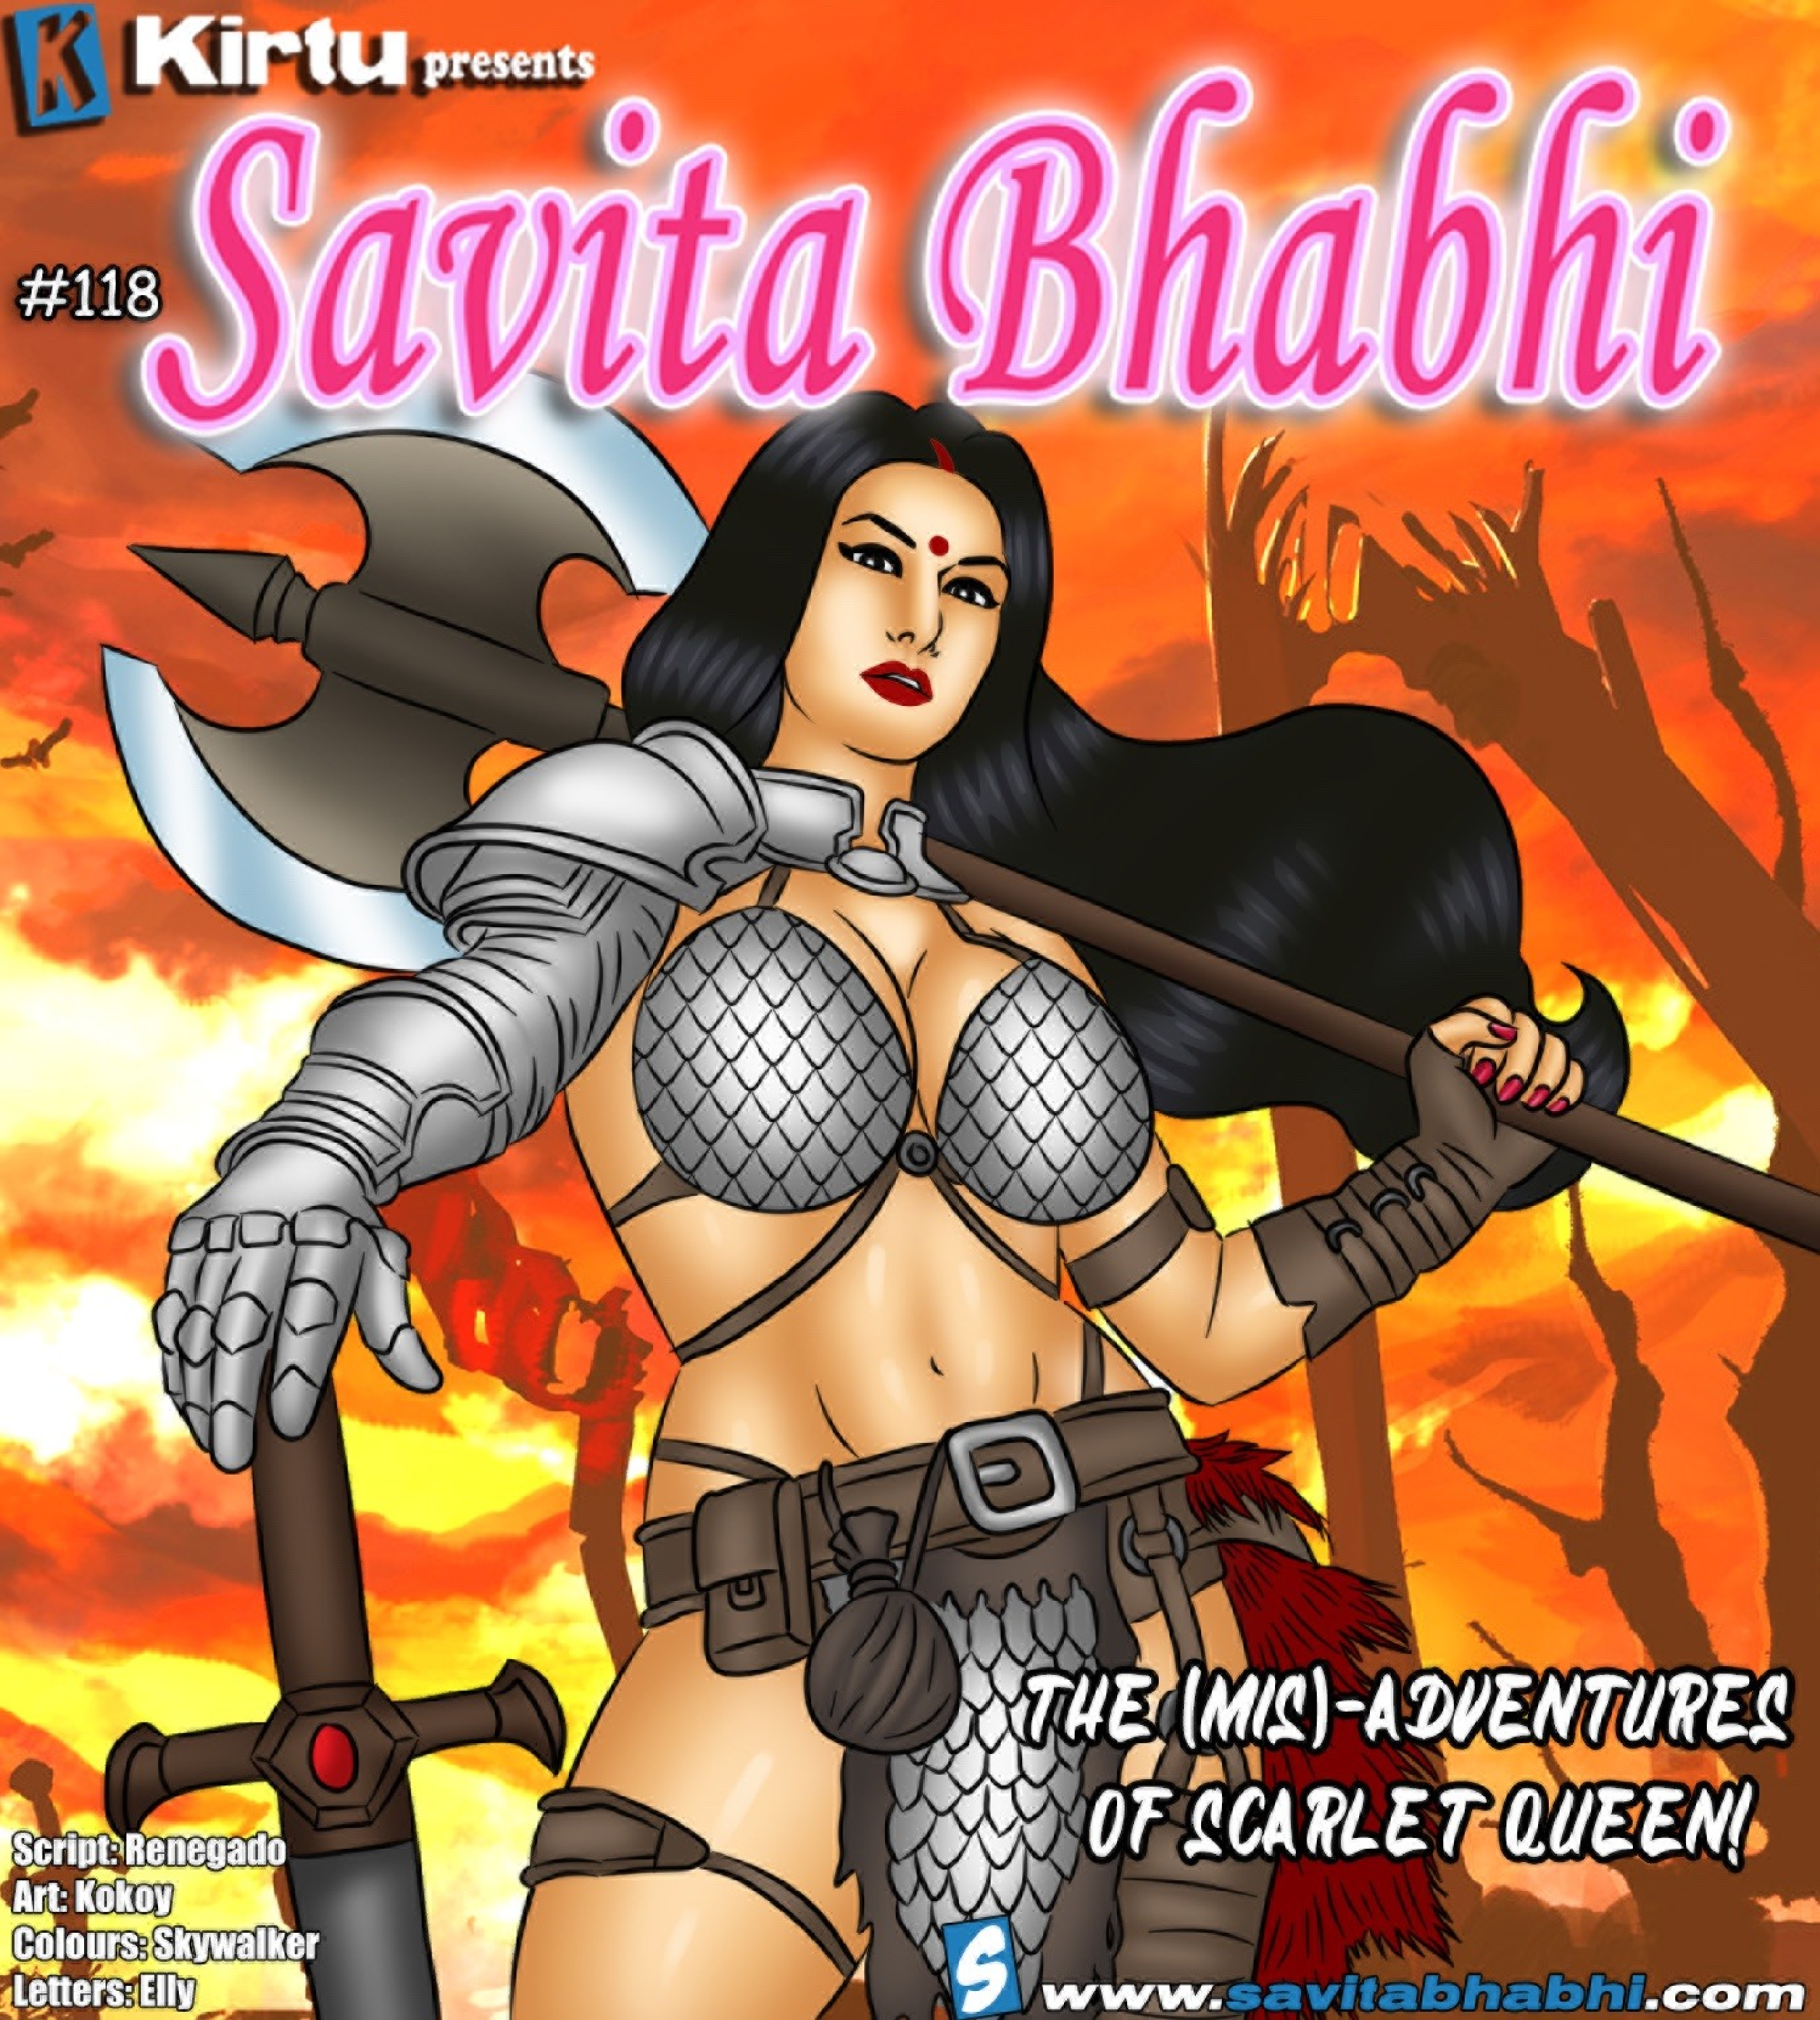 davie persaud recommends Savita Bhabhi All Episodes